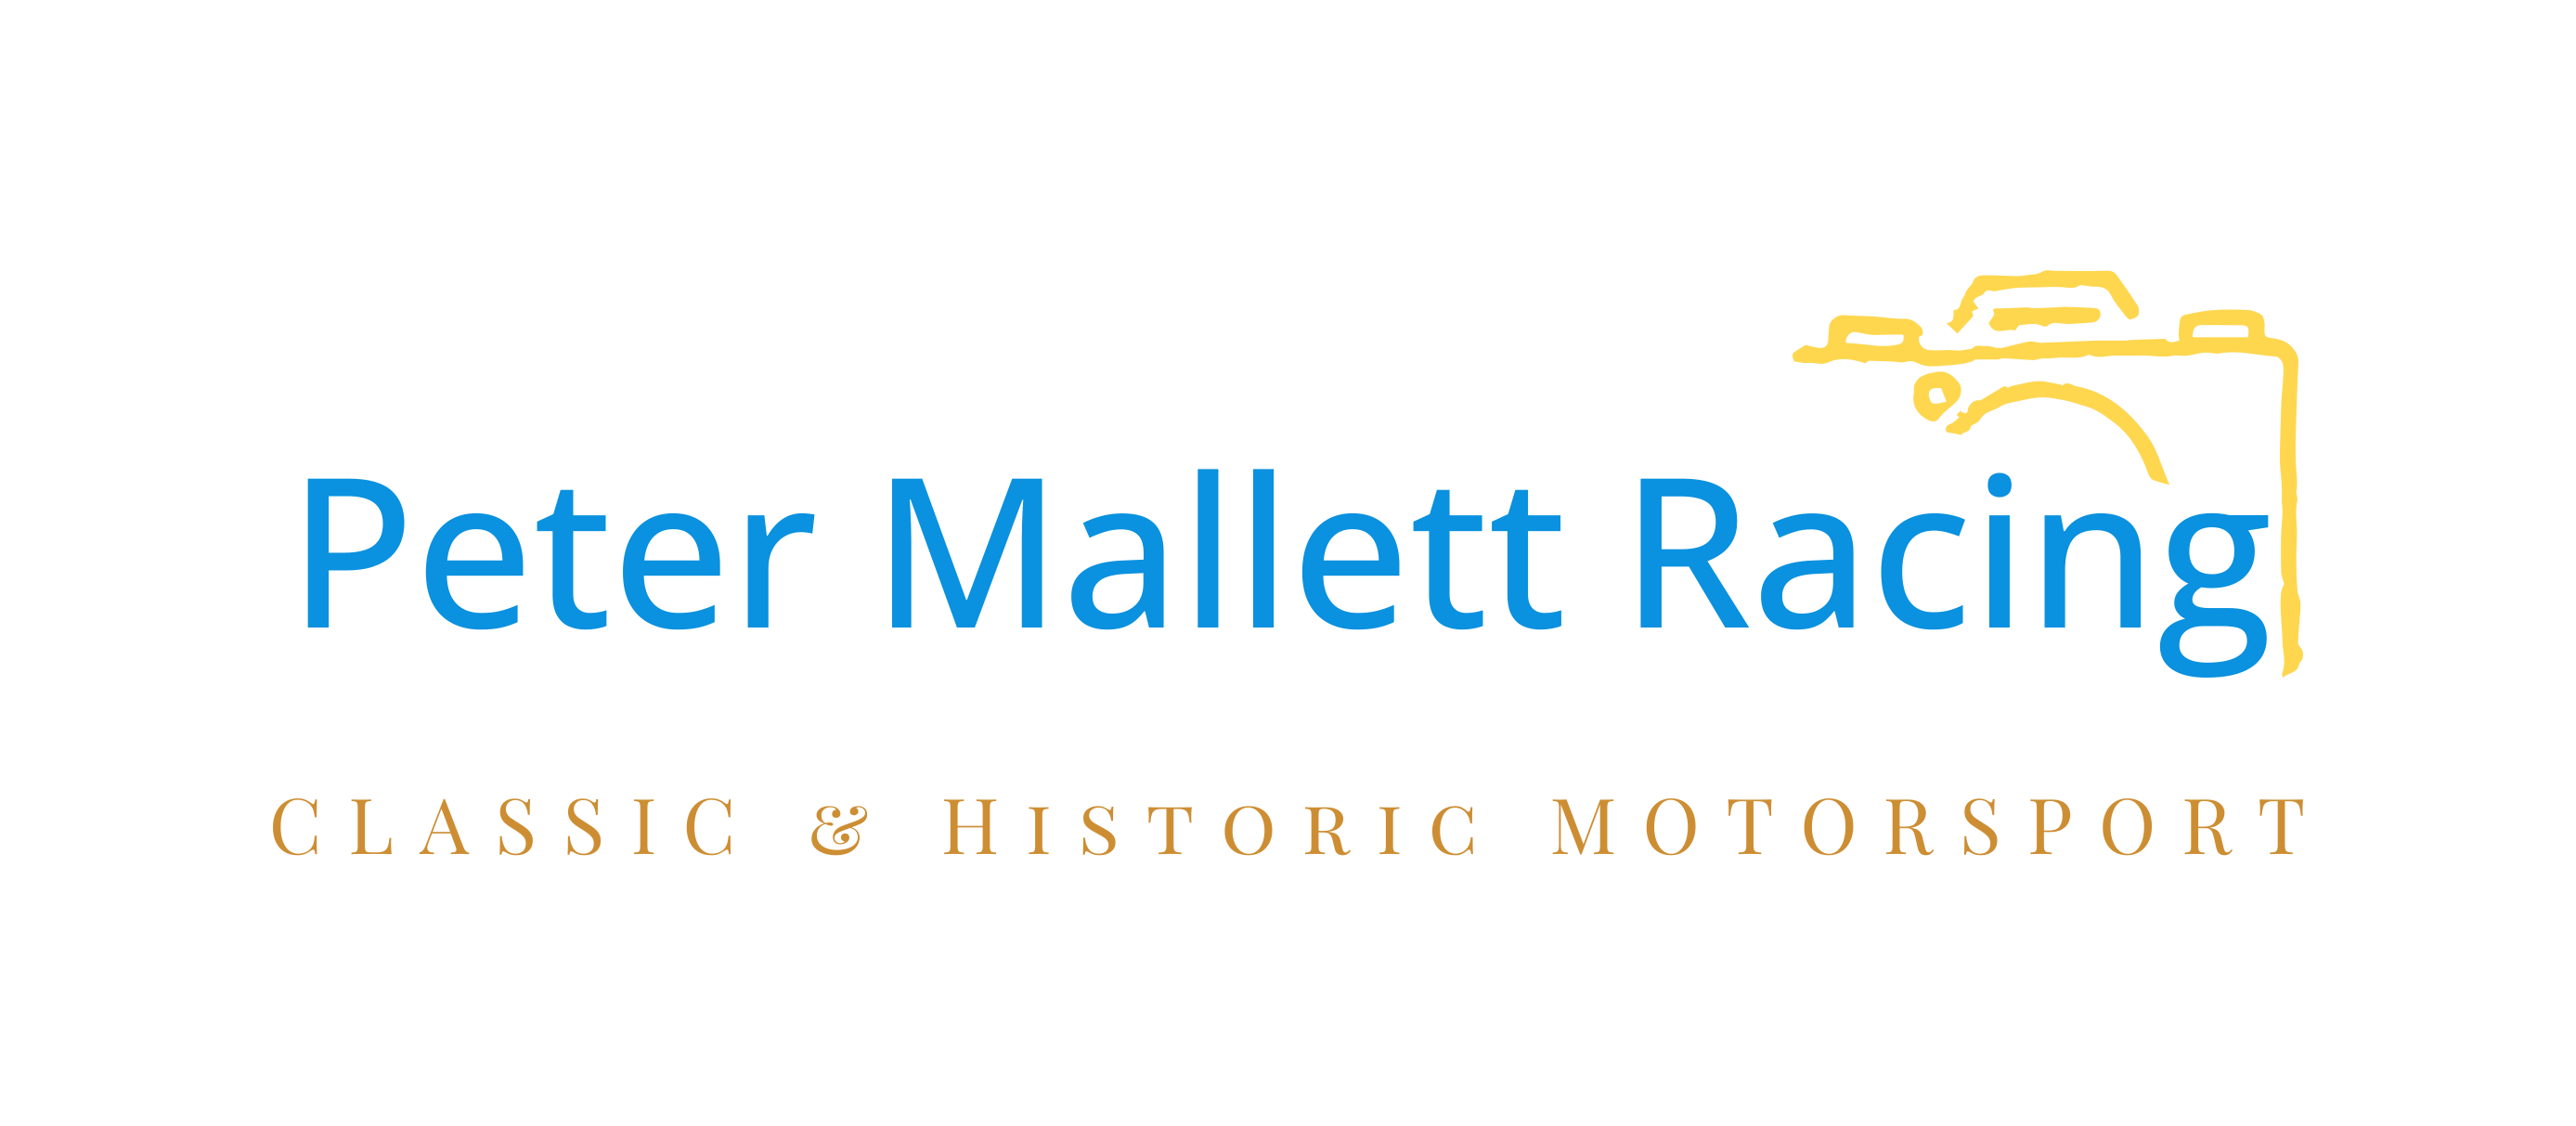 Peter Mallett Racing